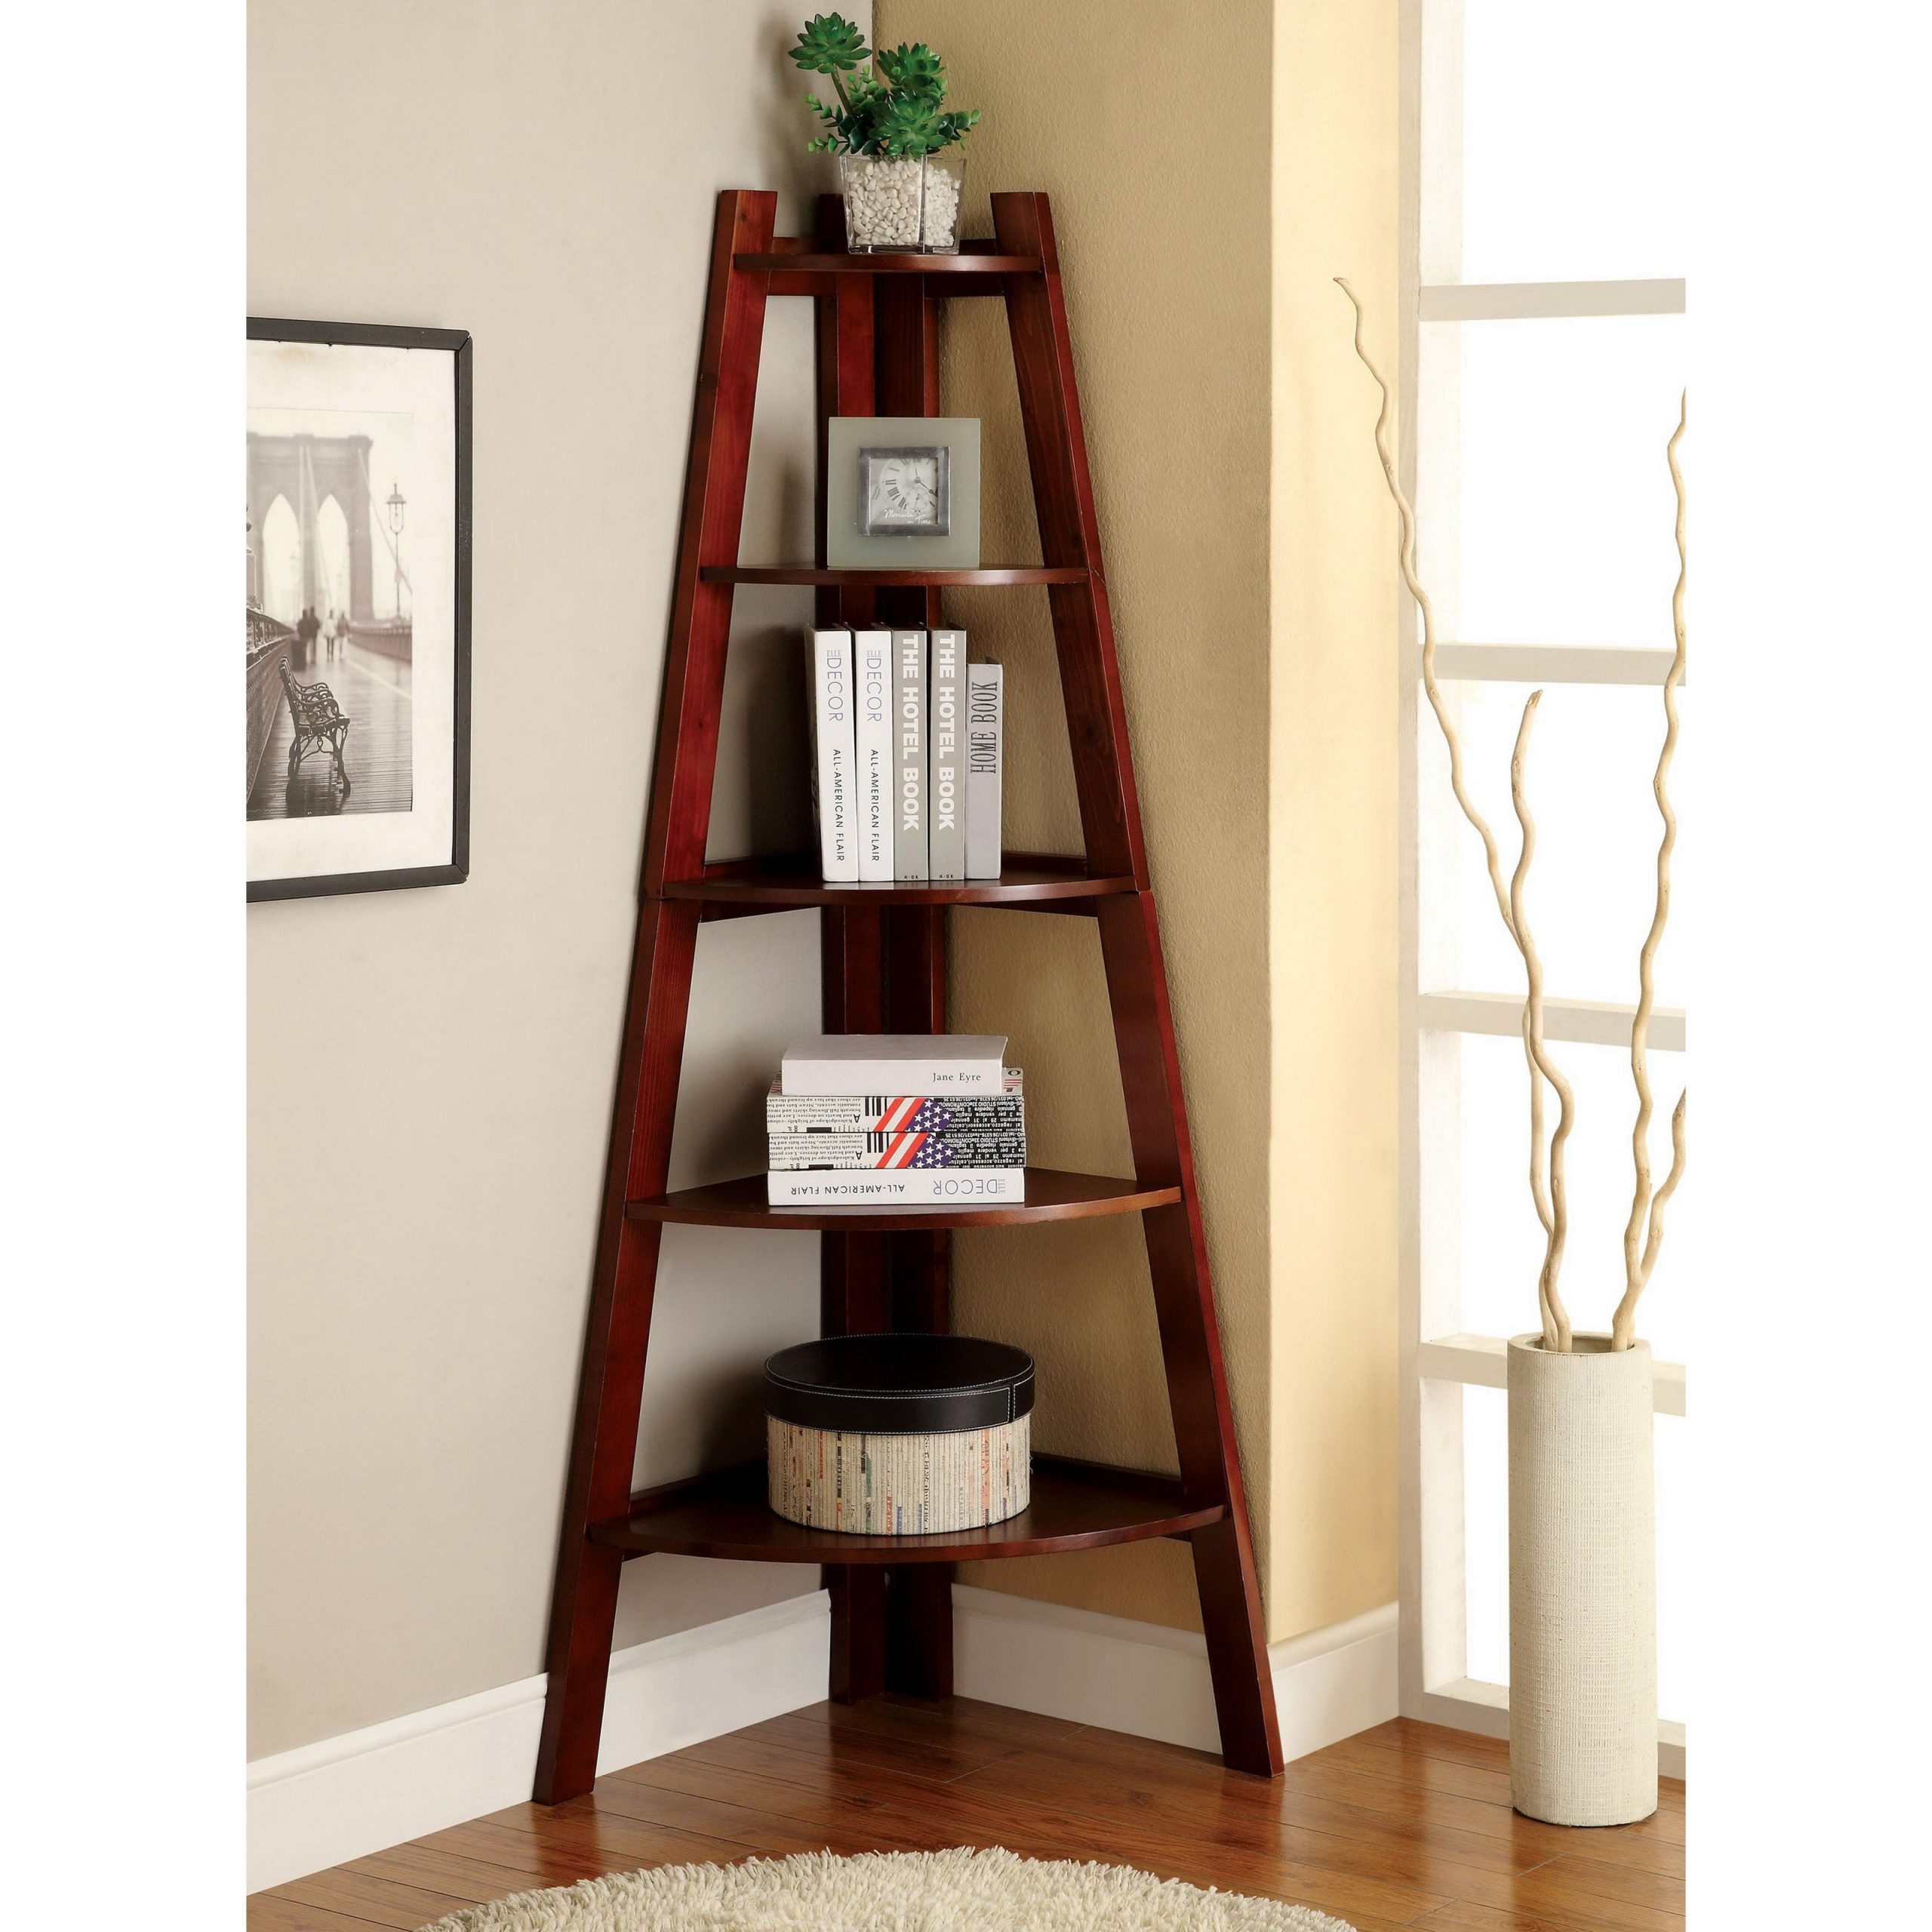 Top Wooden Ladder Shelf Nz Display Bookcase Decor Room Decor inside proportions 3200 X 3200